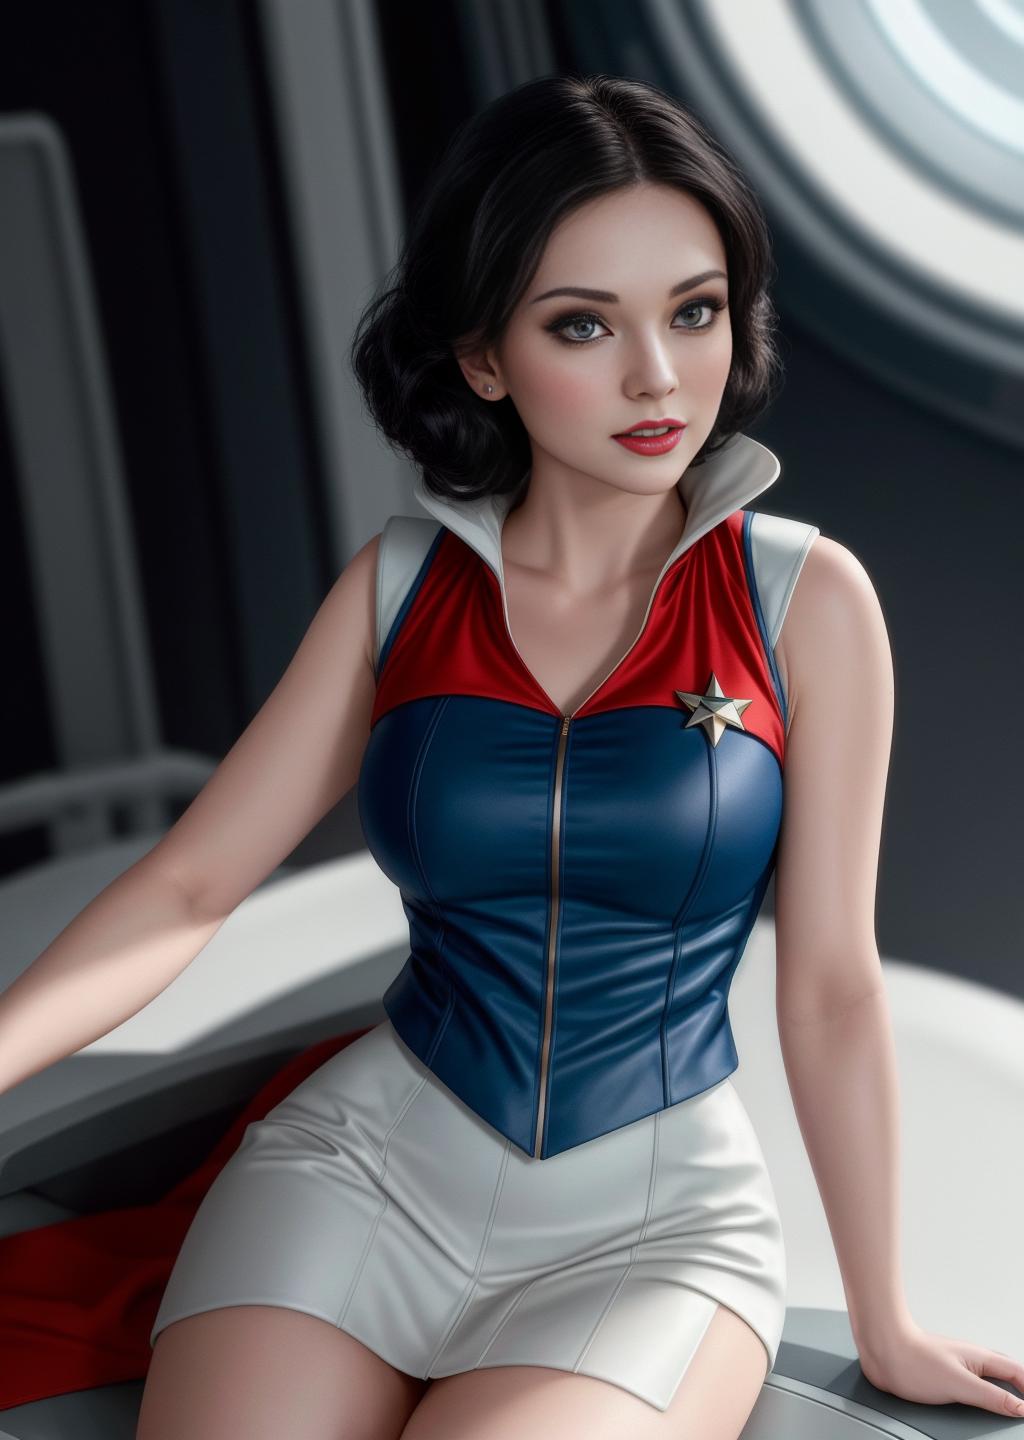 Clothing: Star Trek Uniforms image by LordTempus